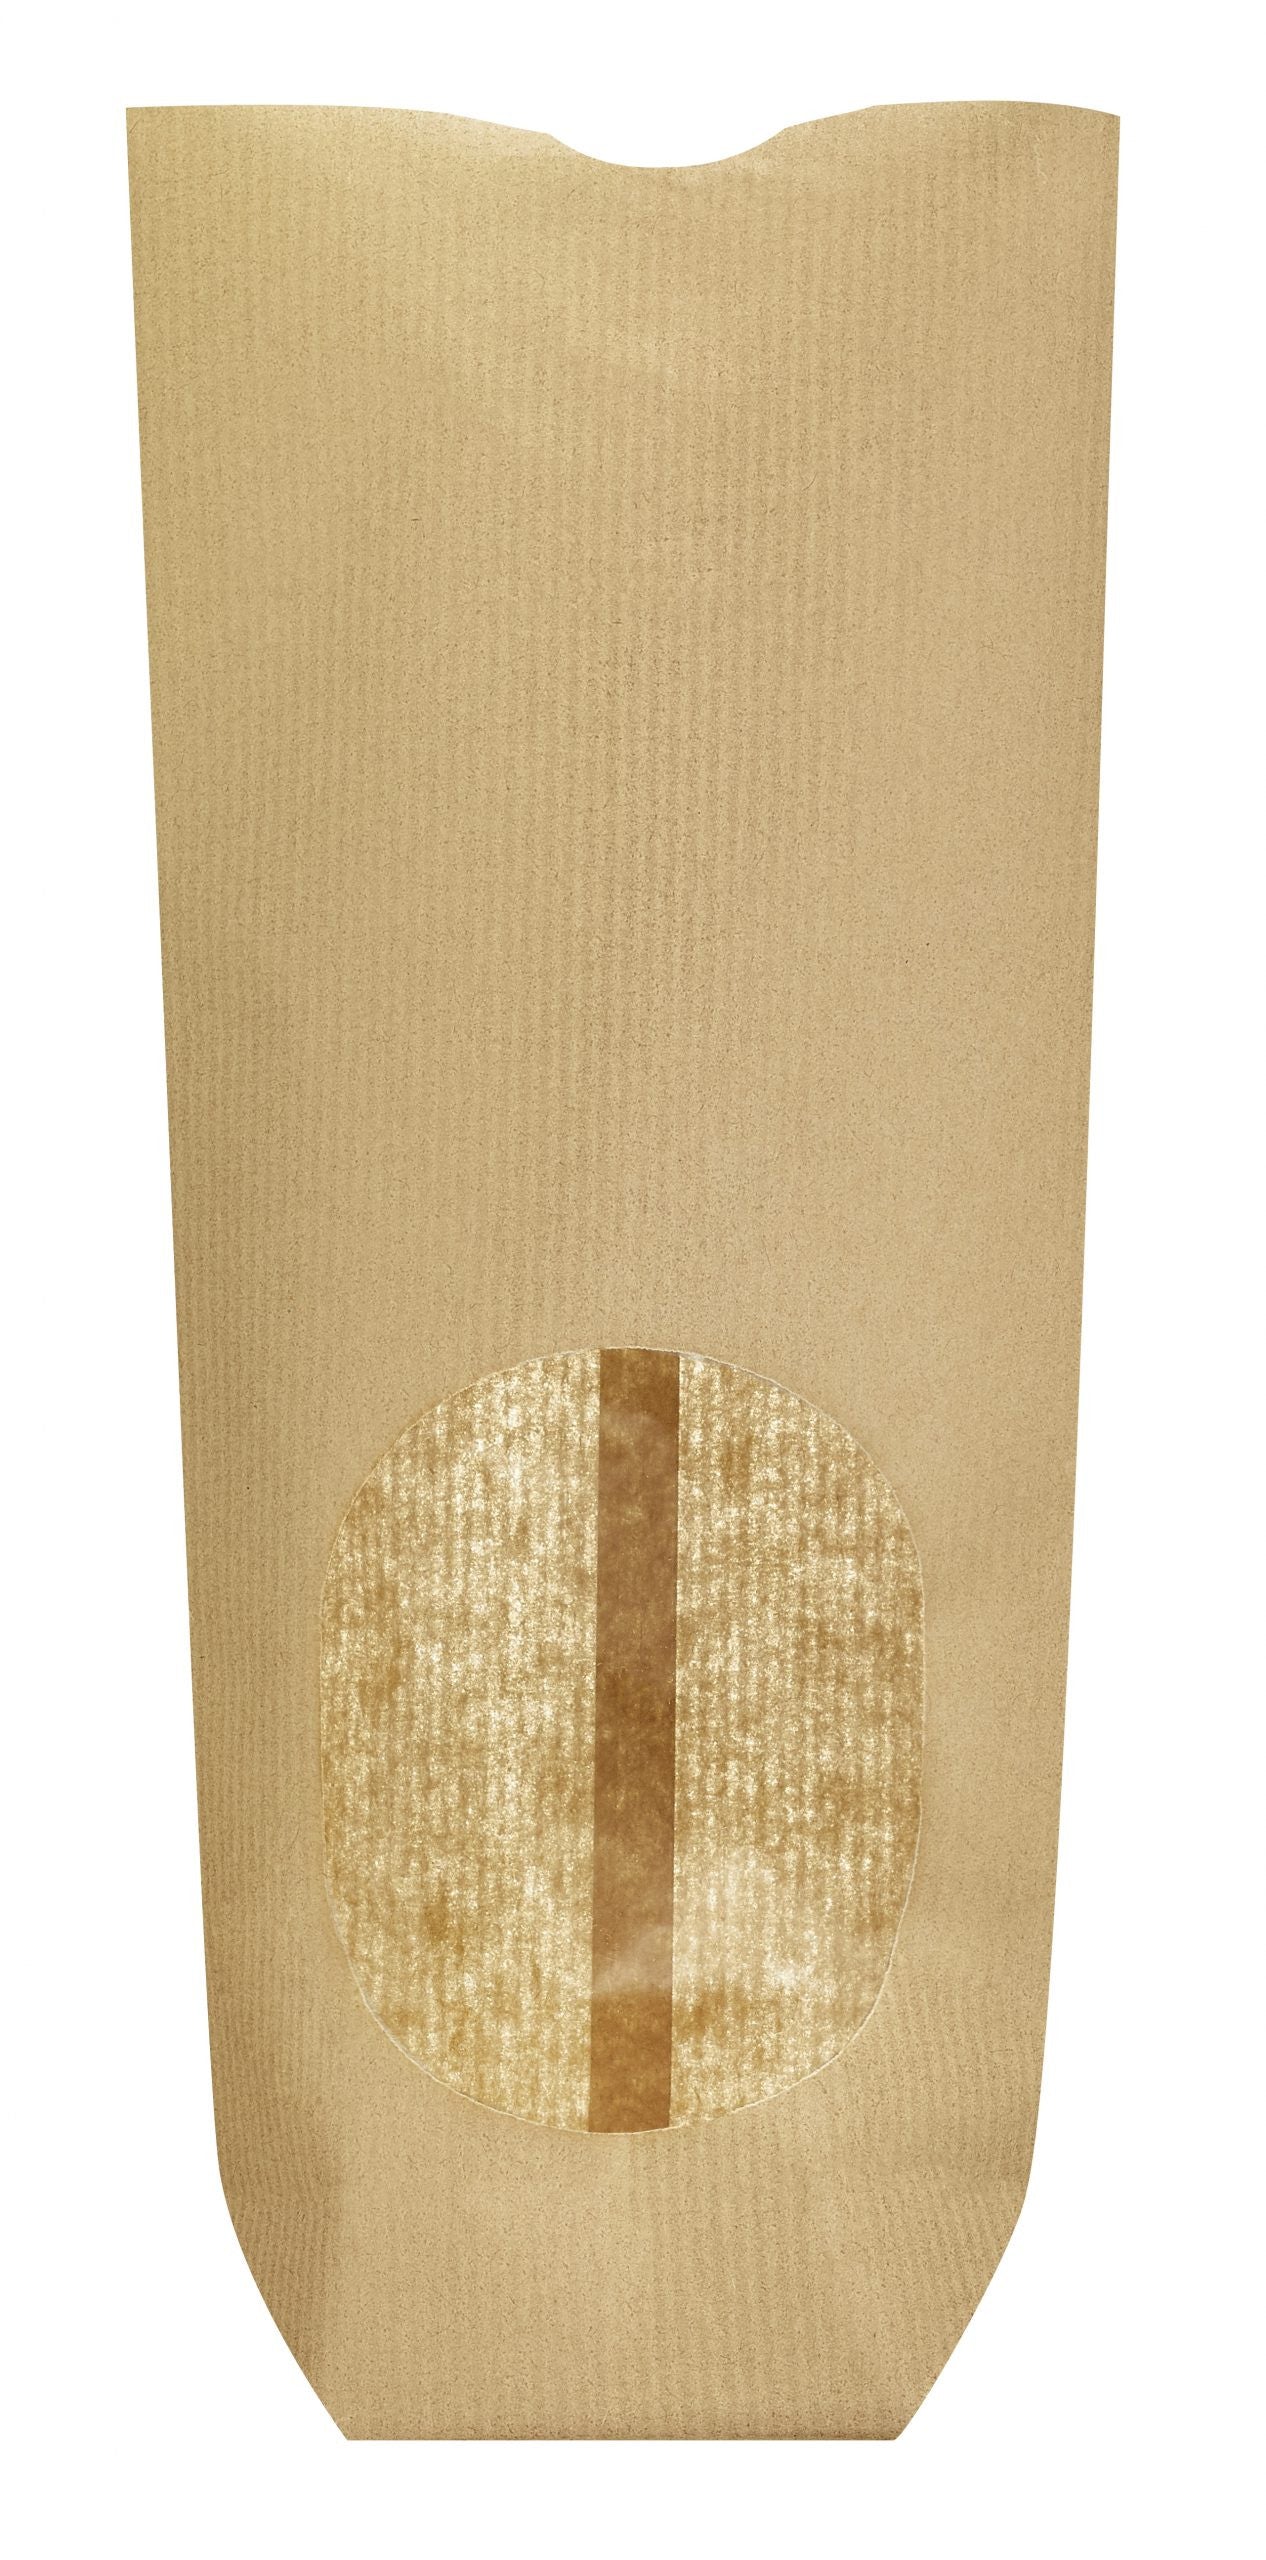 Bolsa de papel kraft con ventana